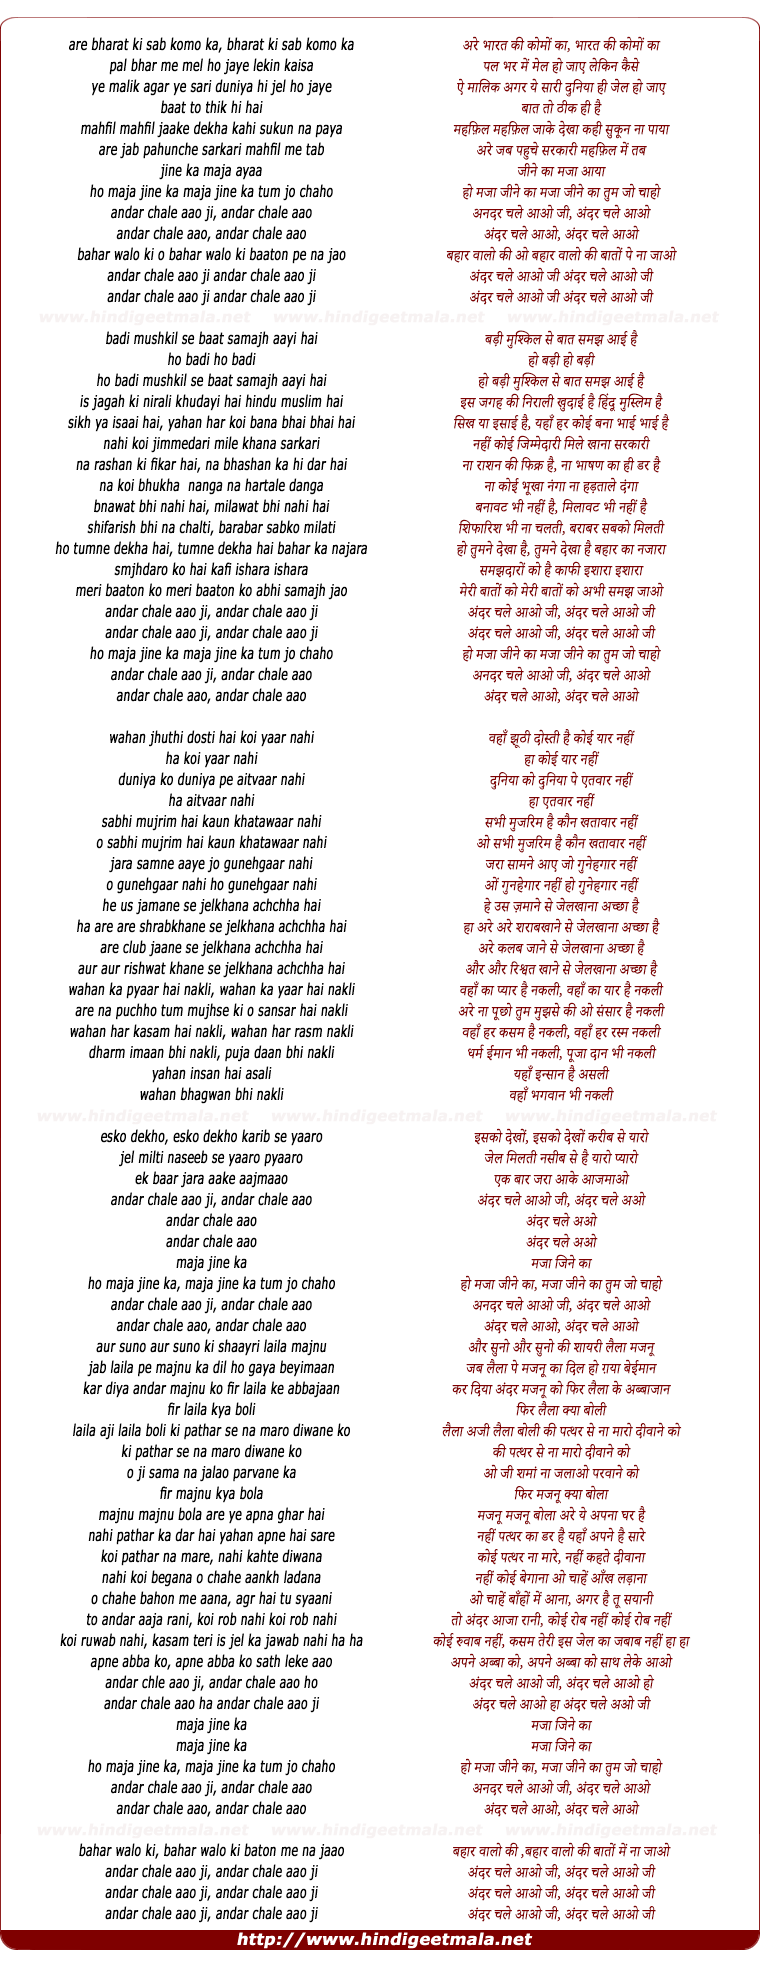 lyrics of song Andar Chale Aao Ji, Andar